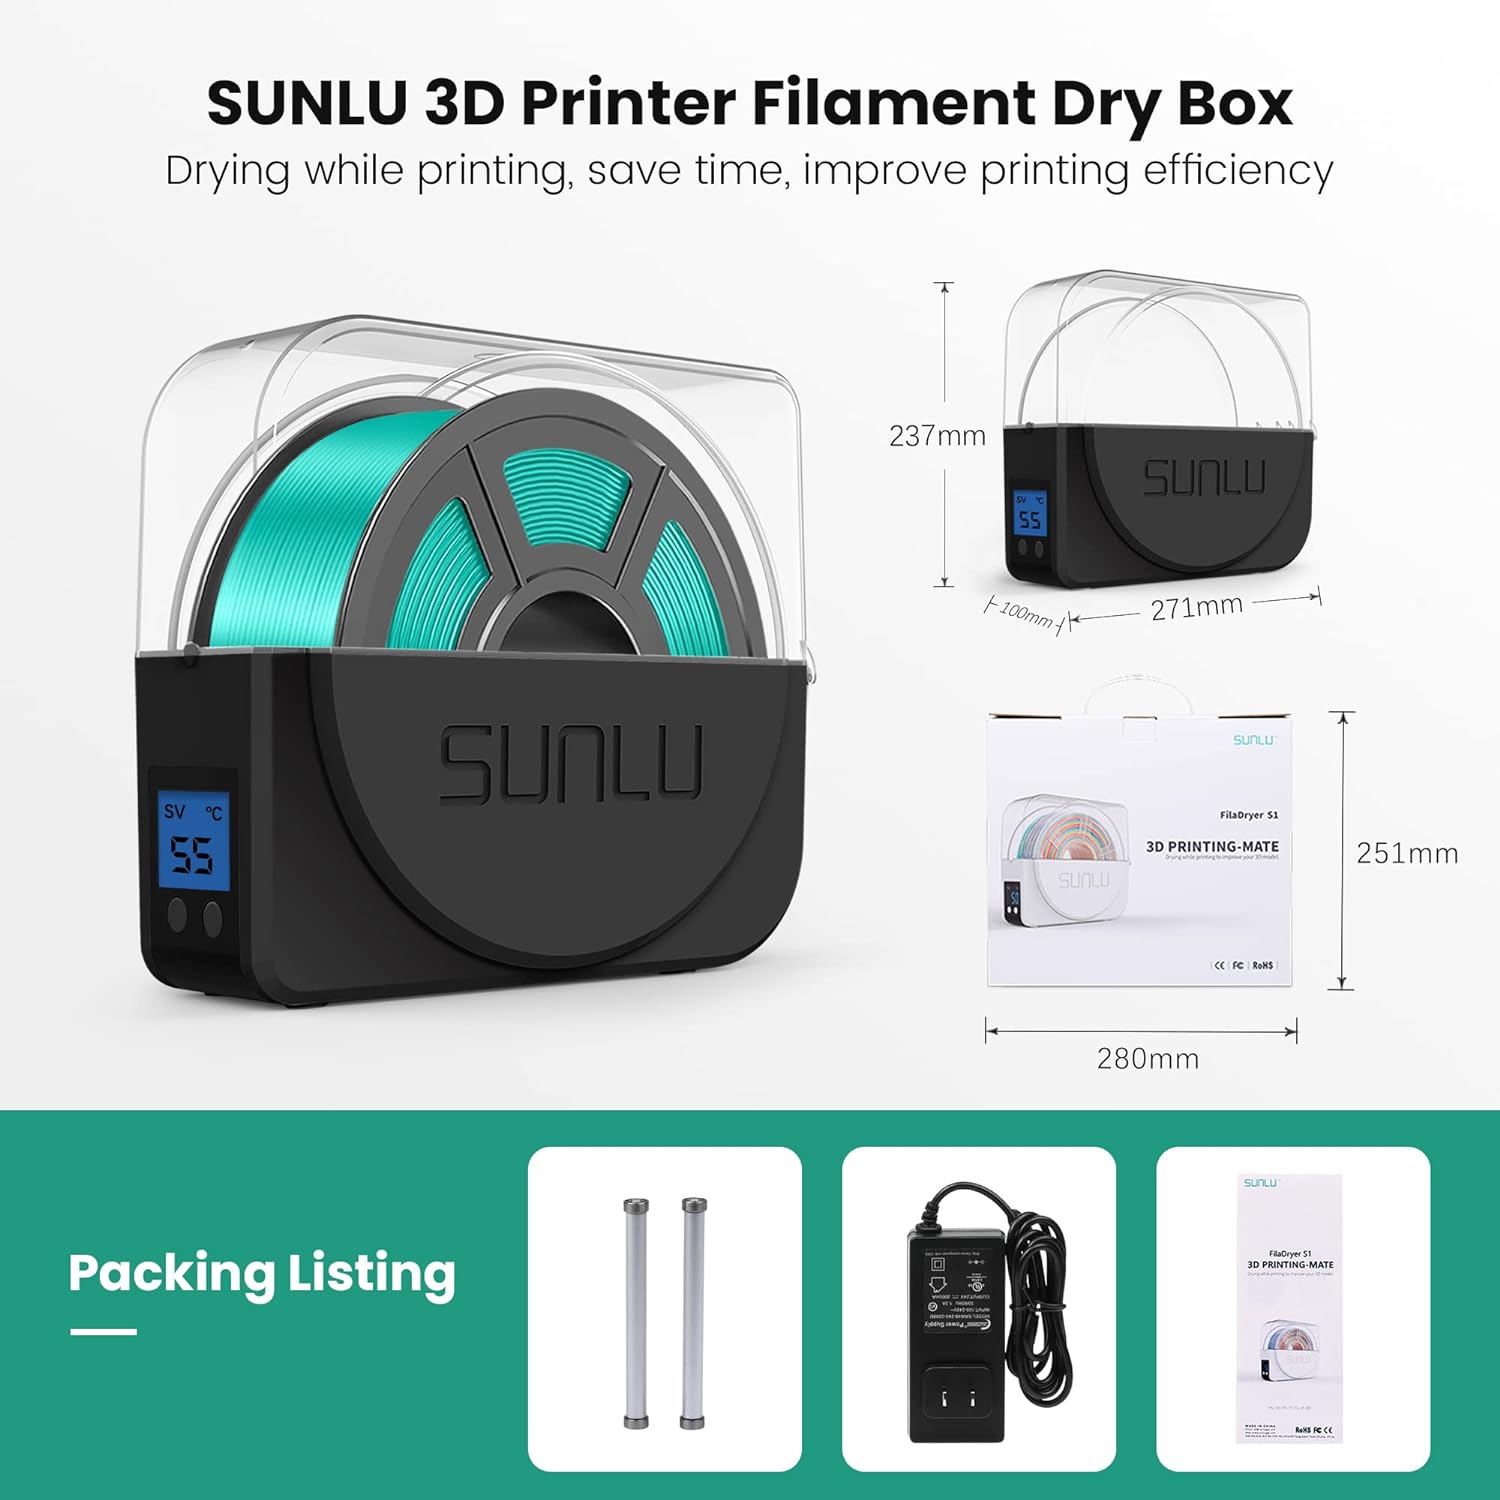 sunlu-official-filament-dryer-s1-plus-built-in-circulation-fan-filament-dryer-box-storage-box-for-3d-printer-filament-17-2 SUNLU Official Filament Dryer S1 Plus Review